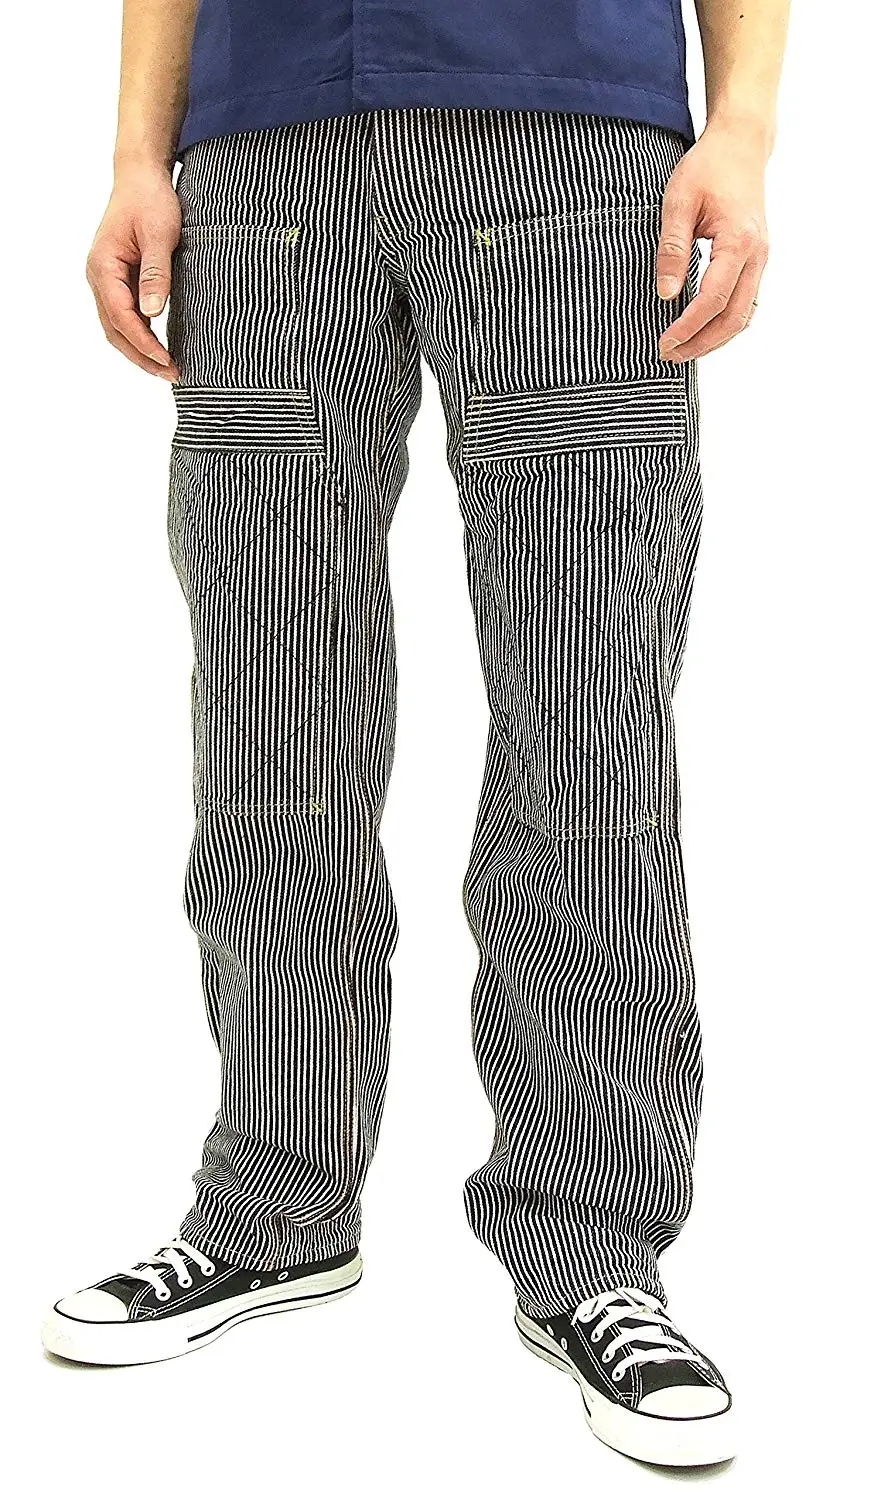 men's hickory stripe jeans